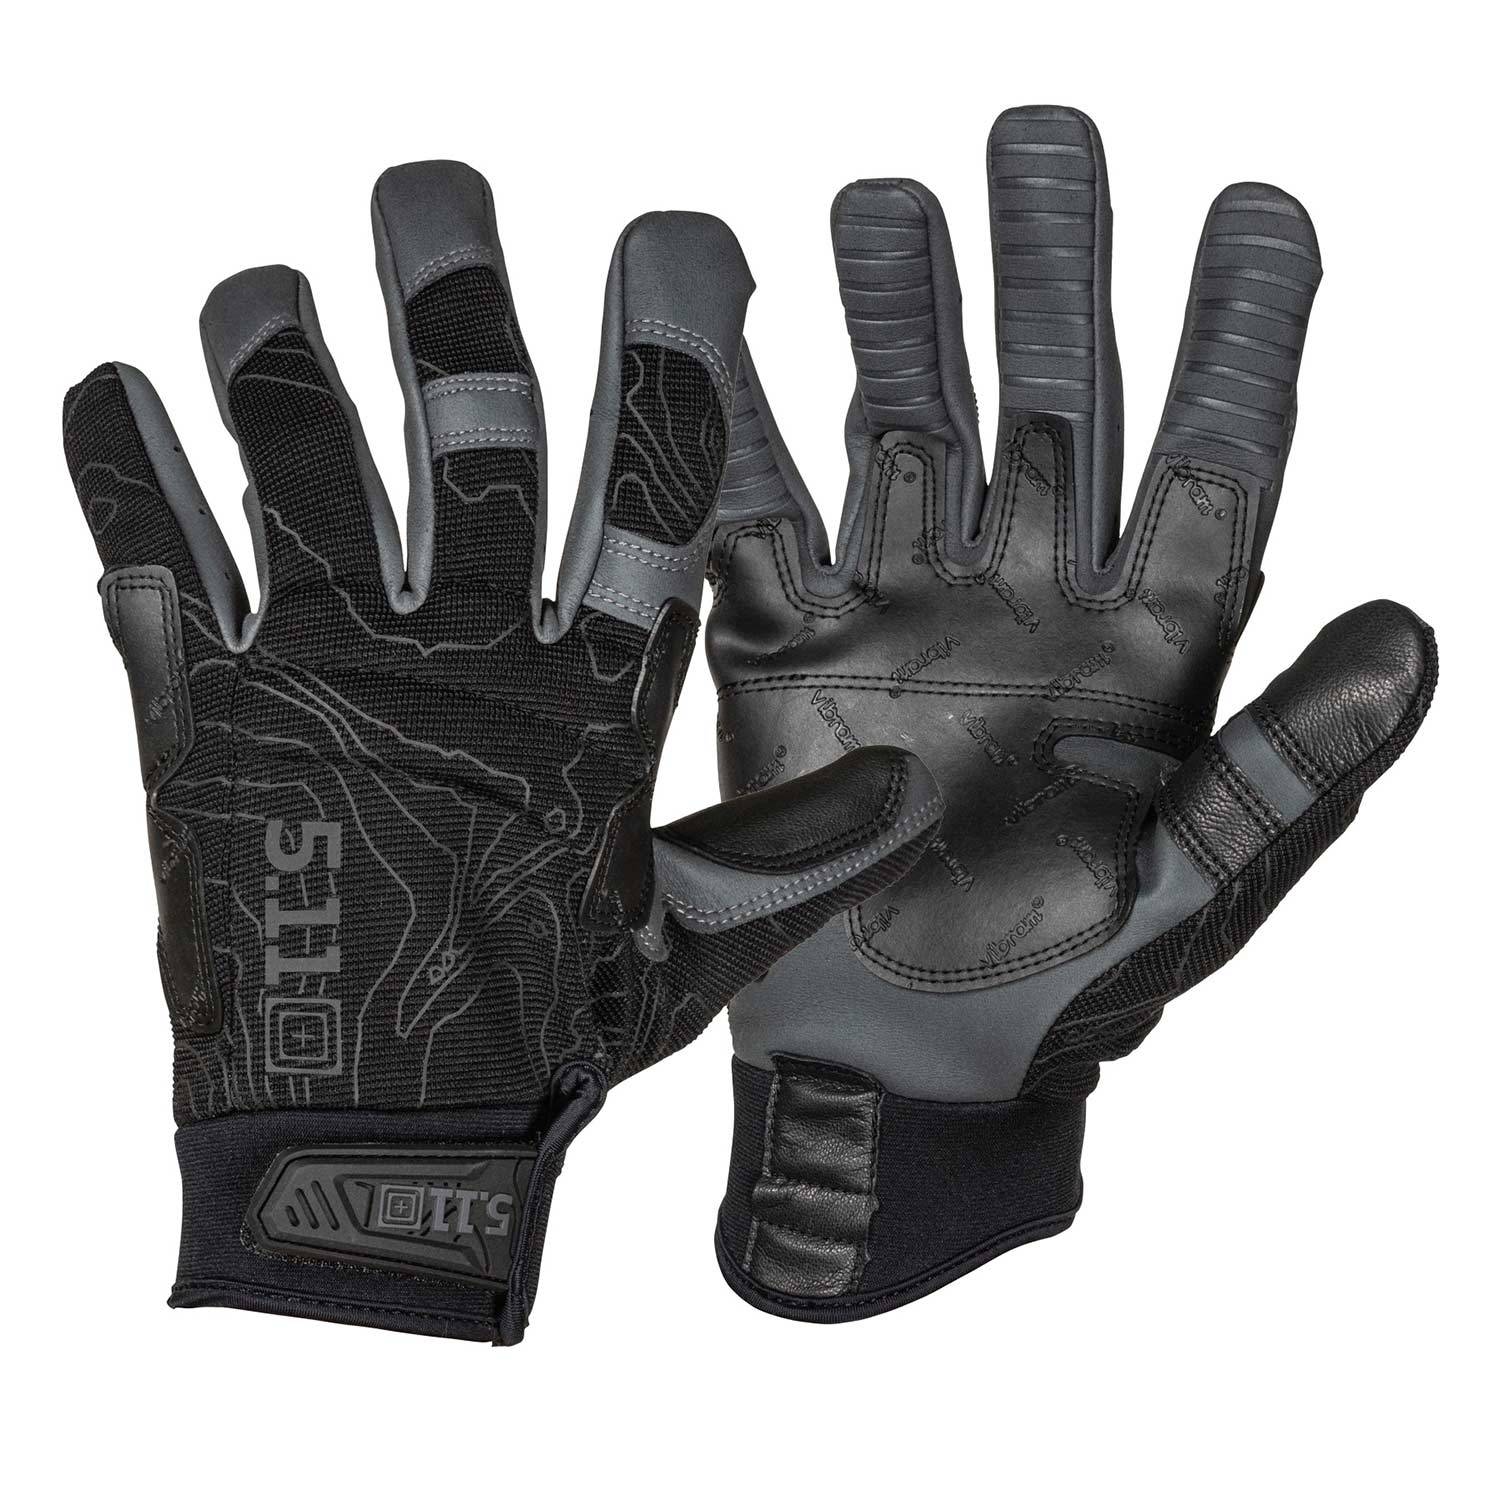 5.11 Tactical Rope K9 Gloves